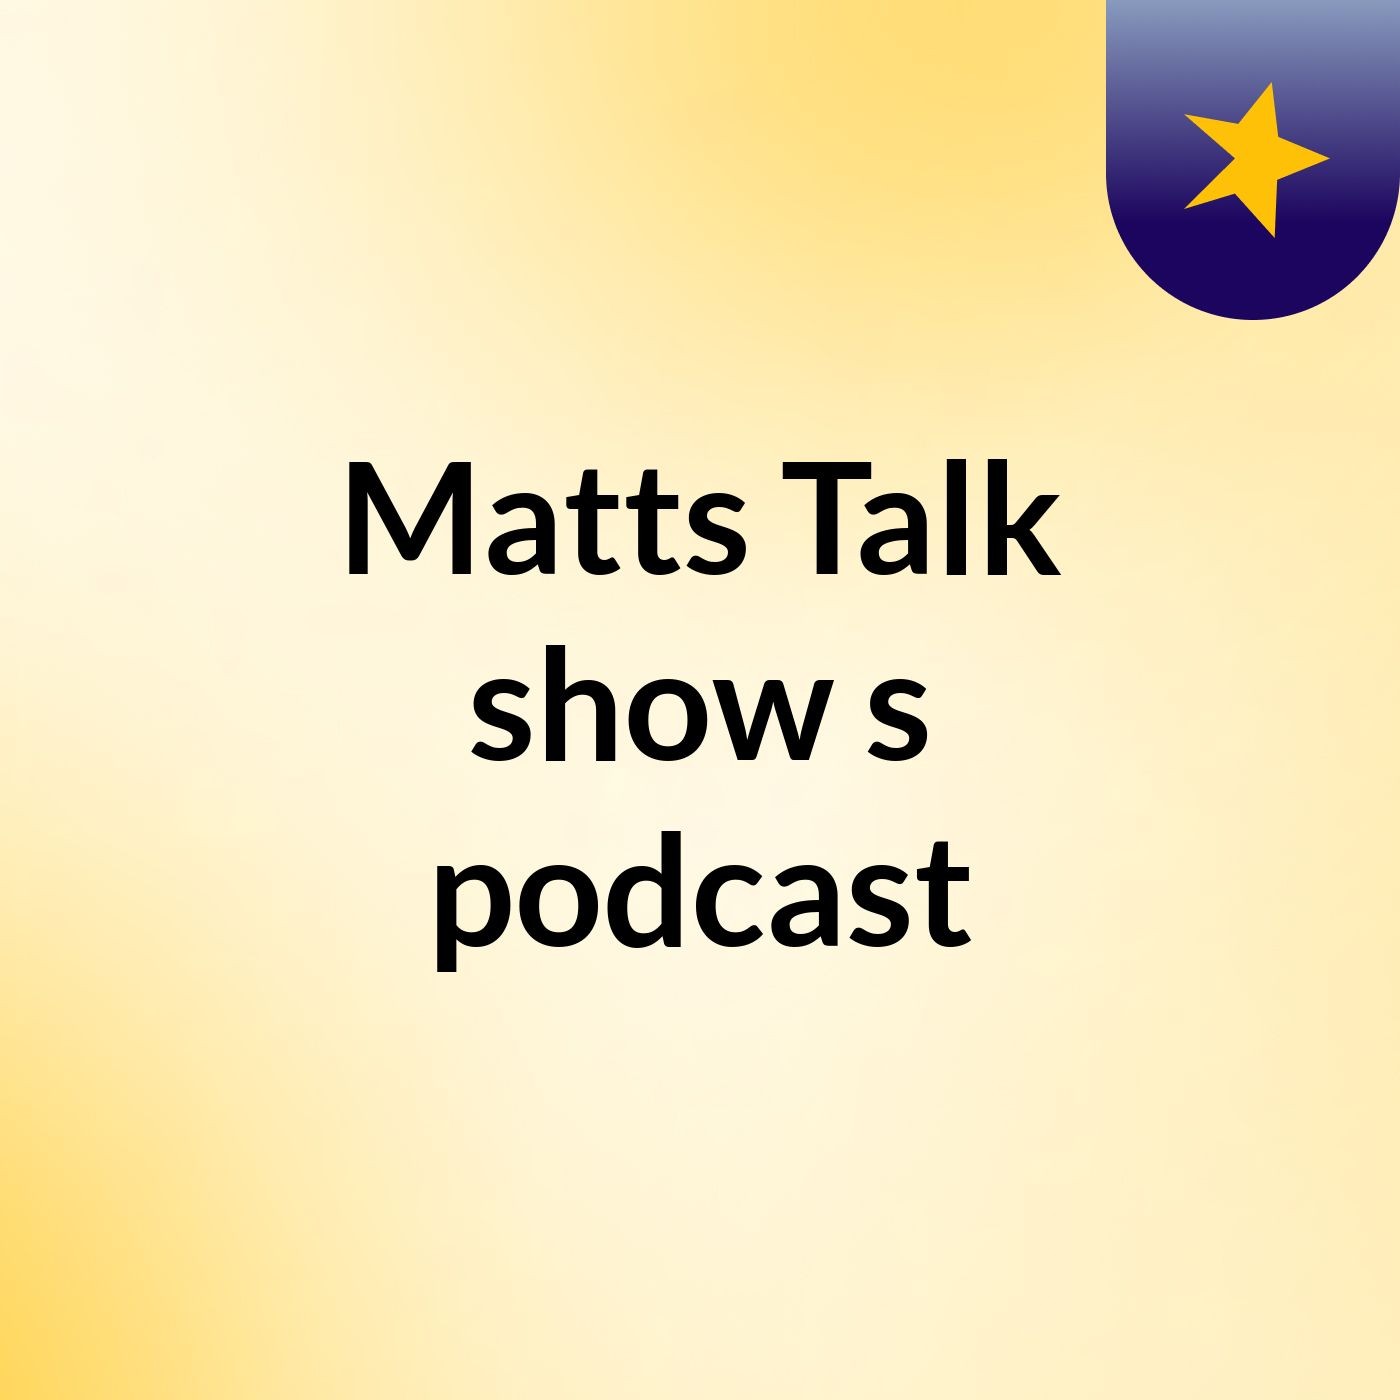 Matts Talk show's podcast